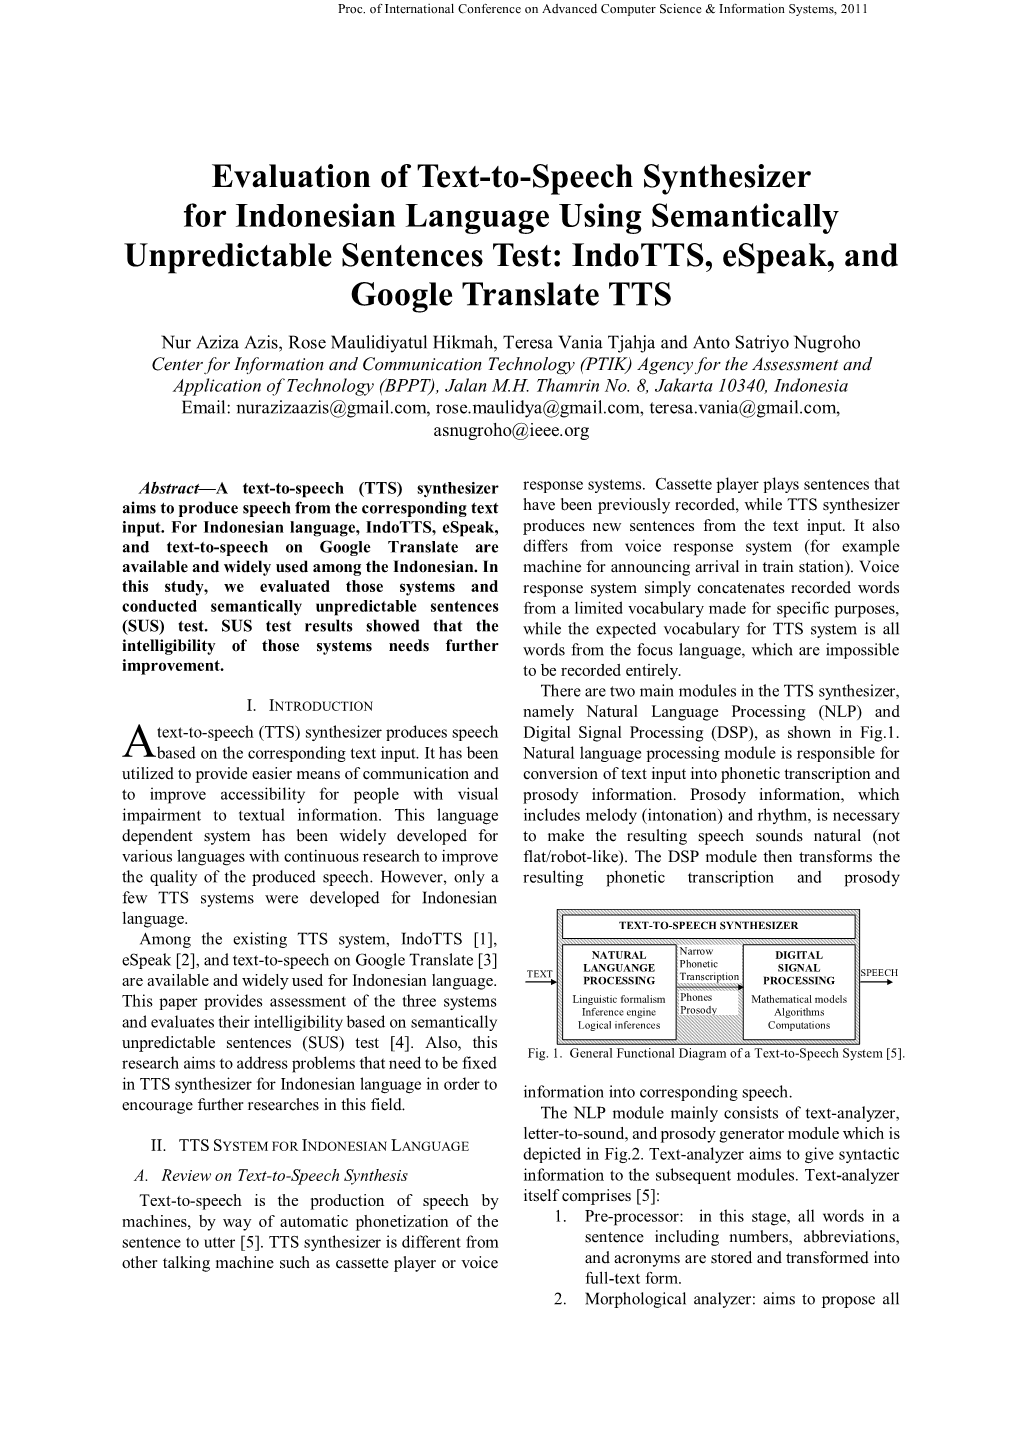 Evaluation of Text-To-Speech Synthesizer for Indonesian Language Using Semantically Unpredictable Sentences Test: Indotts, Espeak, and Google Translate TTS